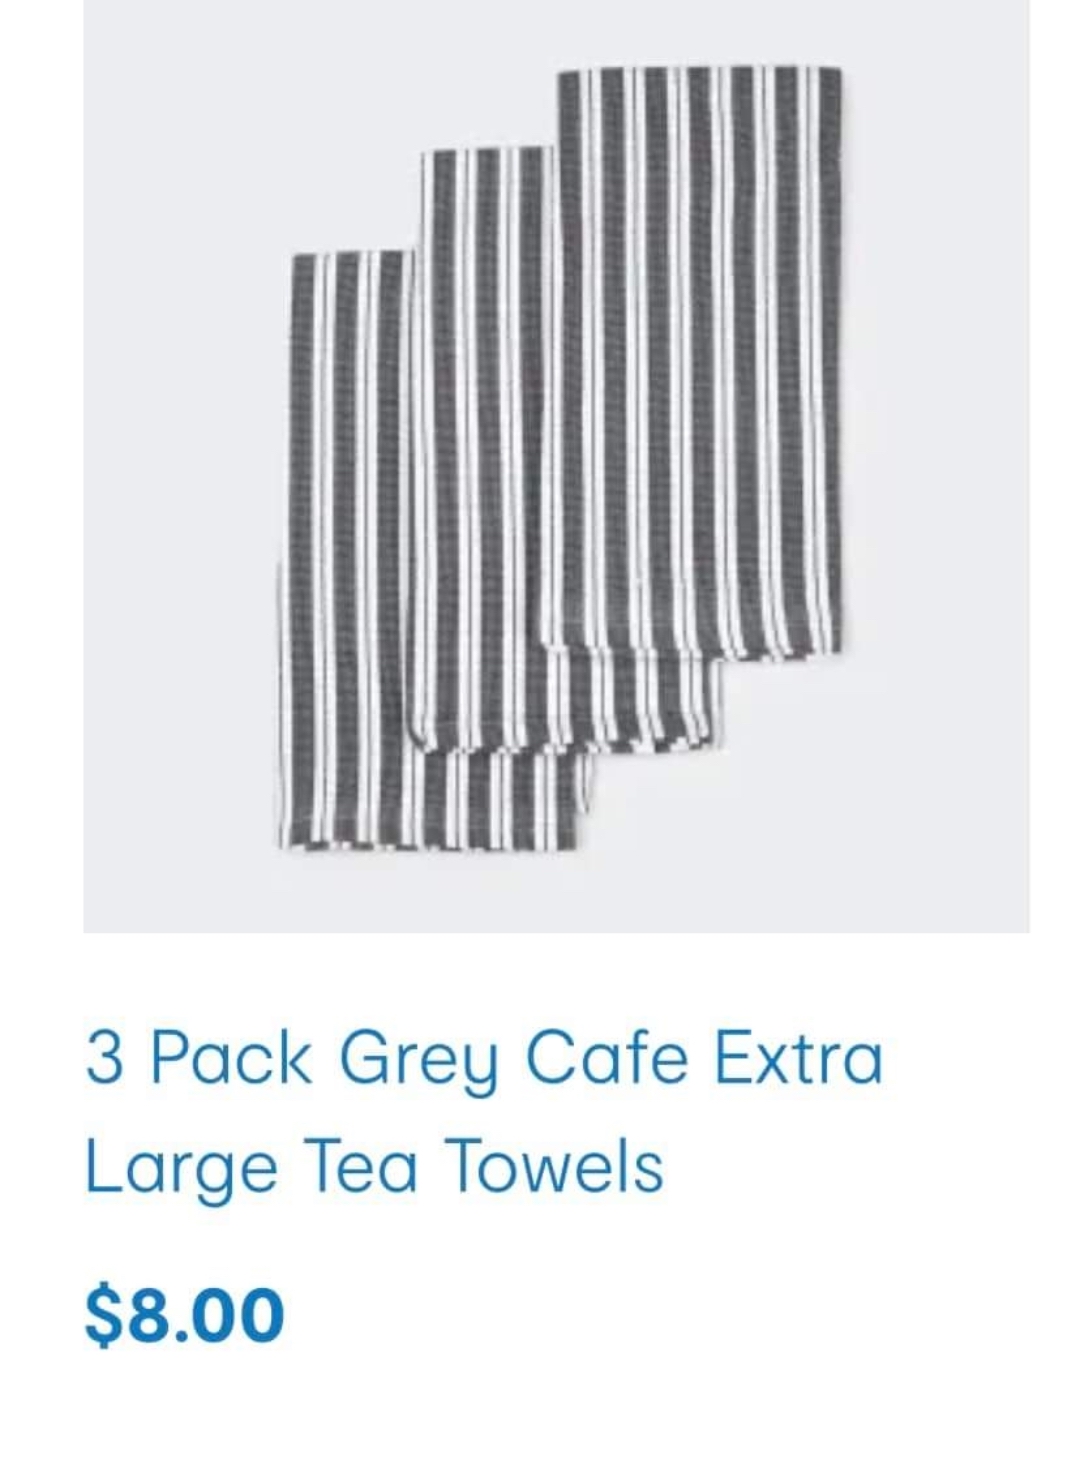 Striped tea towels from Kmart